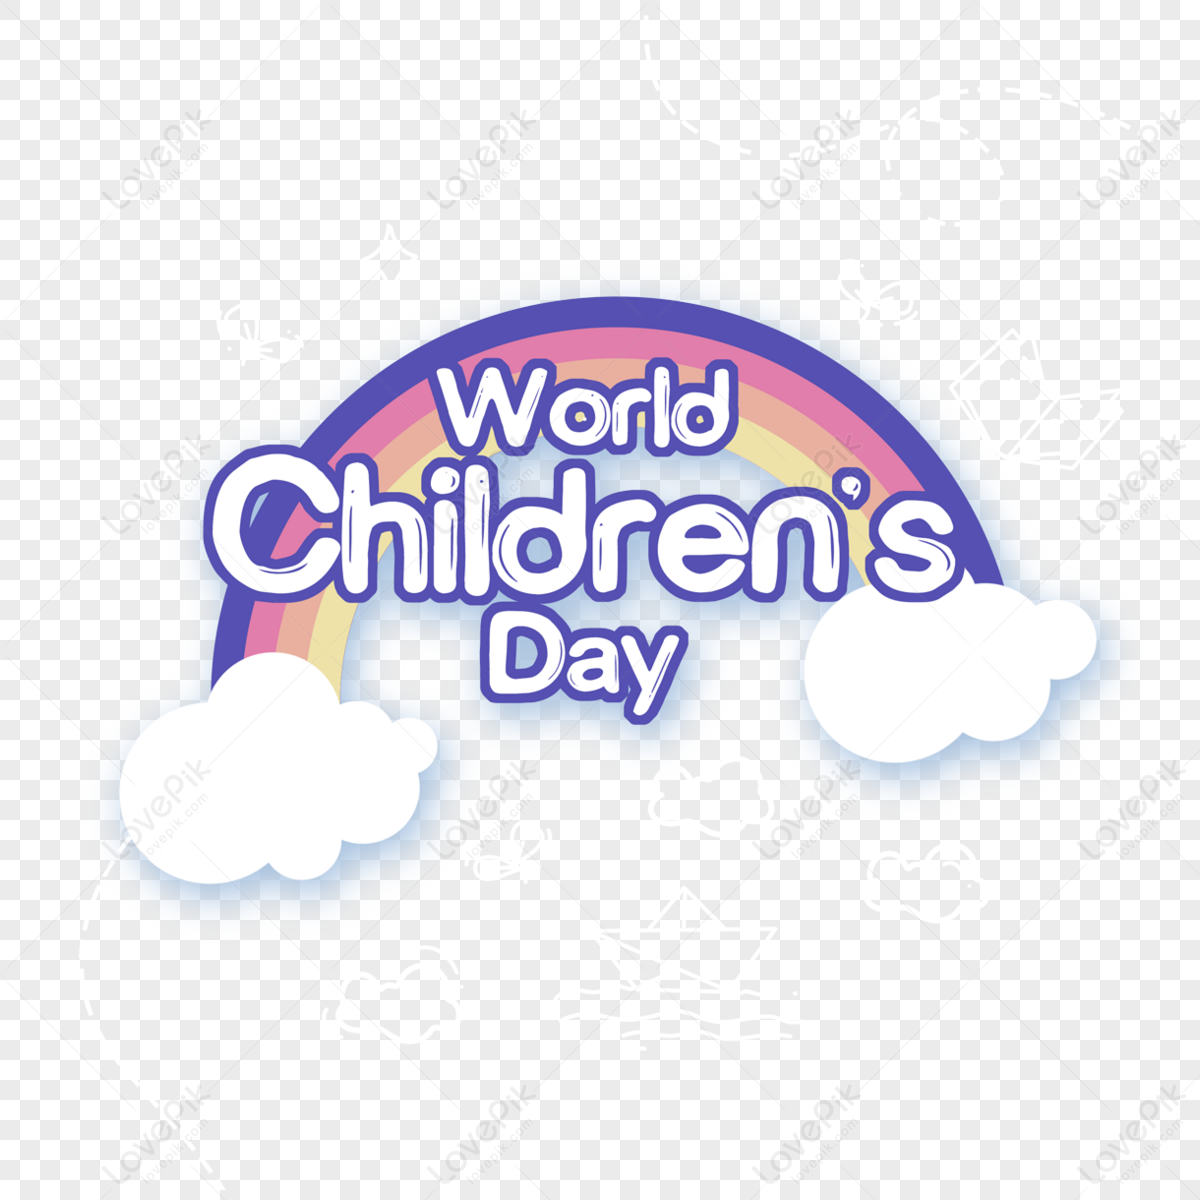 World Children's Day today - Bangladesh Post